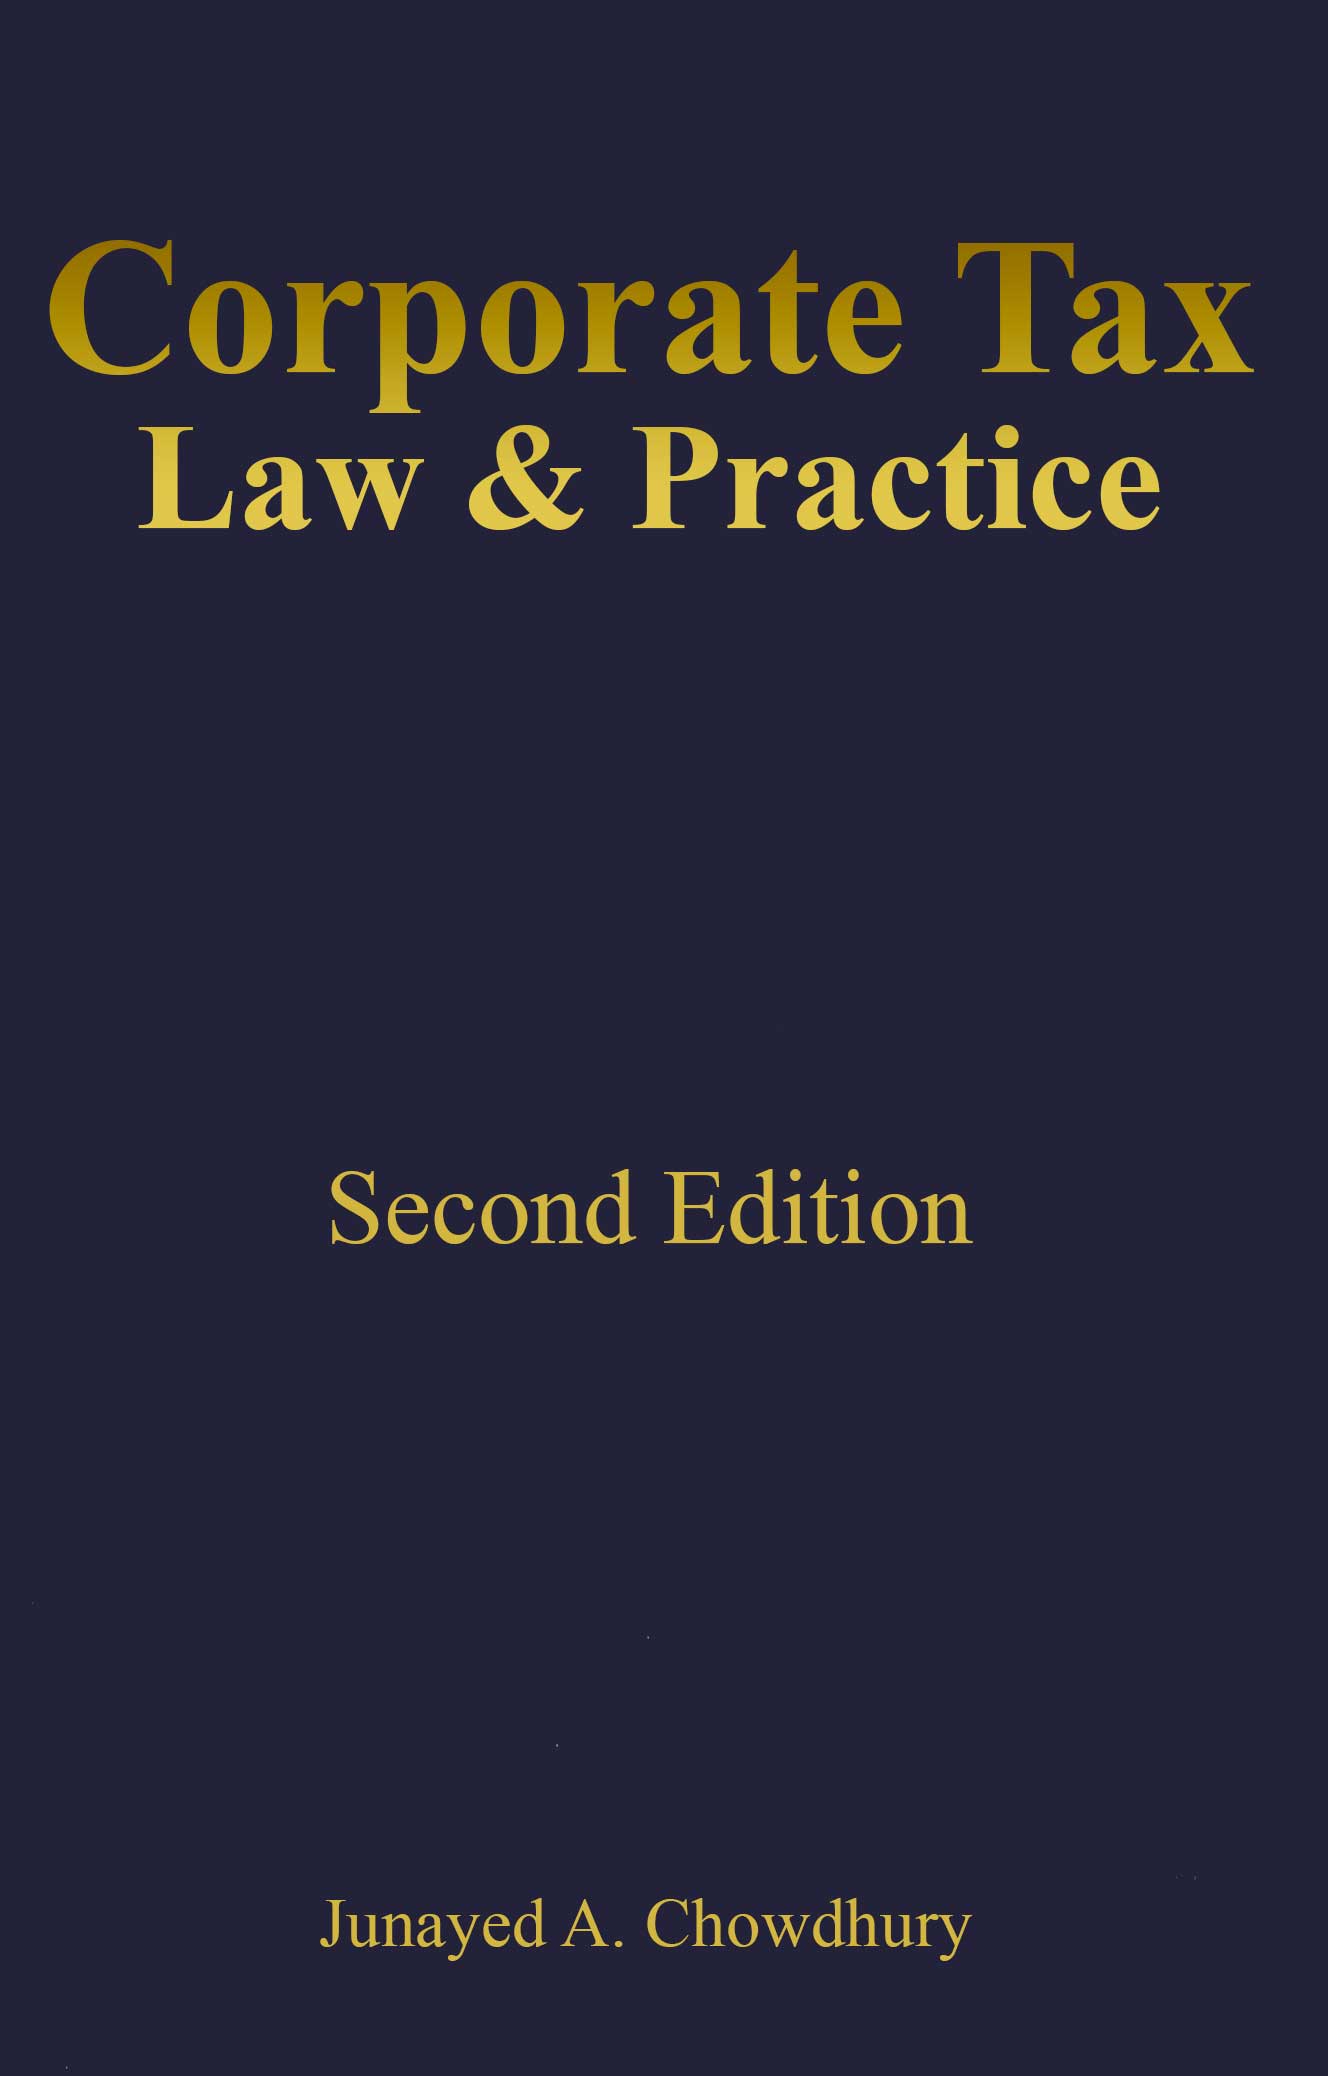 Corporate Tax, Law & Practice